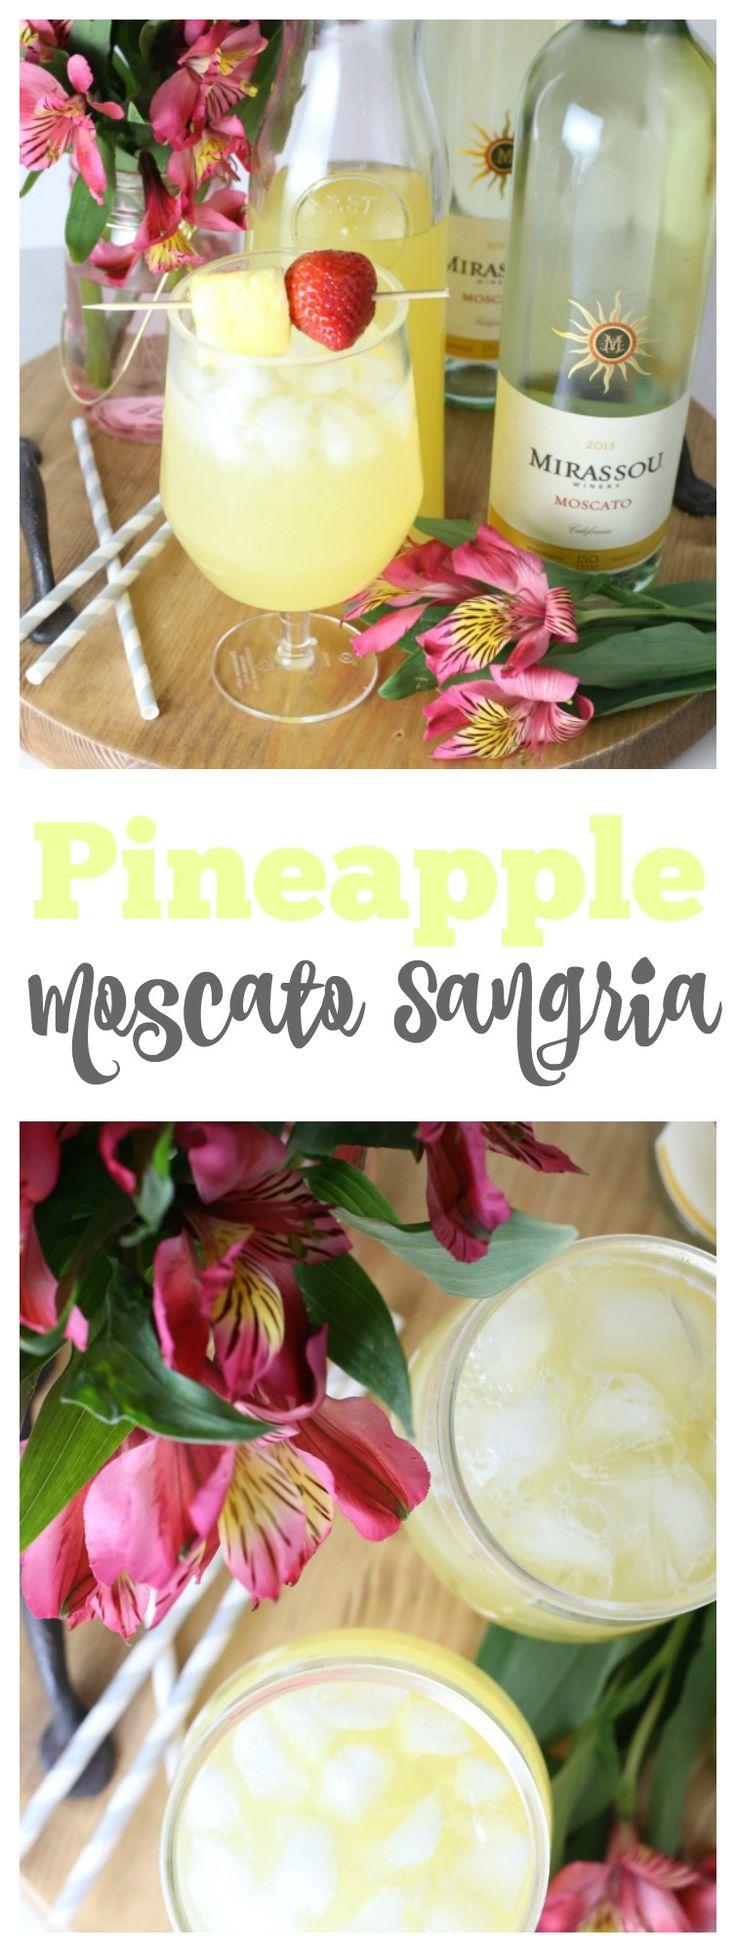 Wedding - Pineapple Moscato Sangria